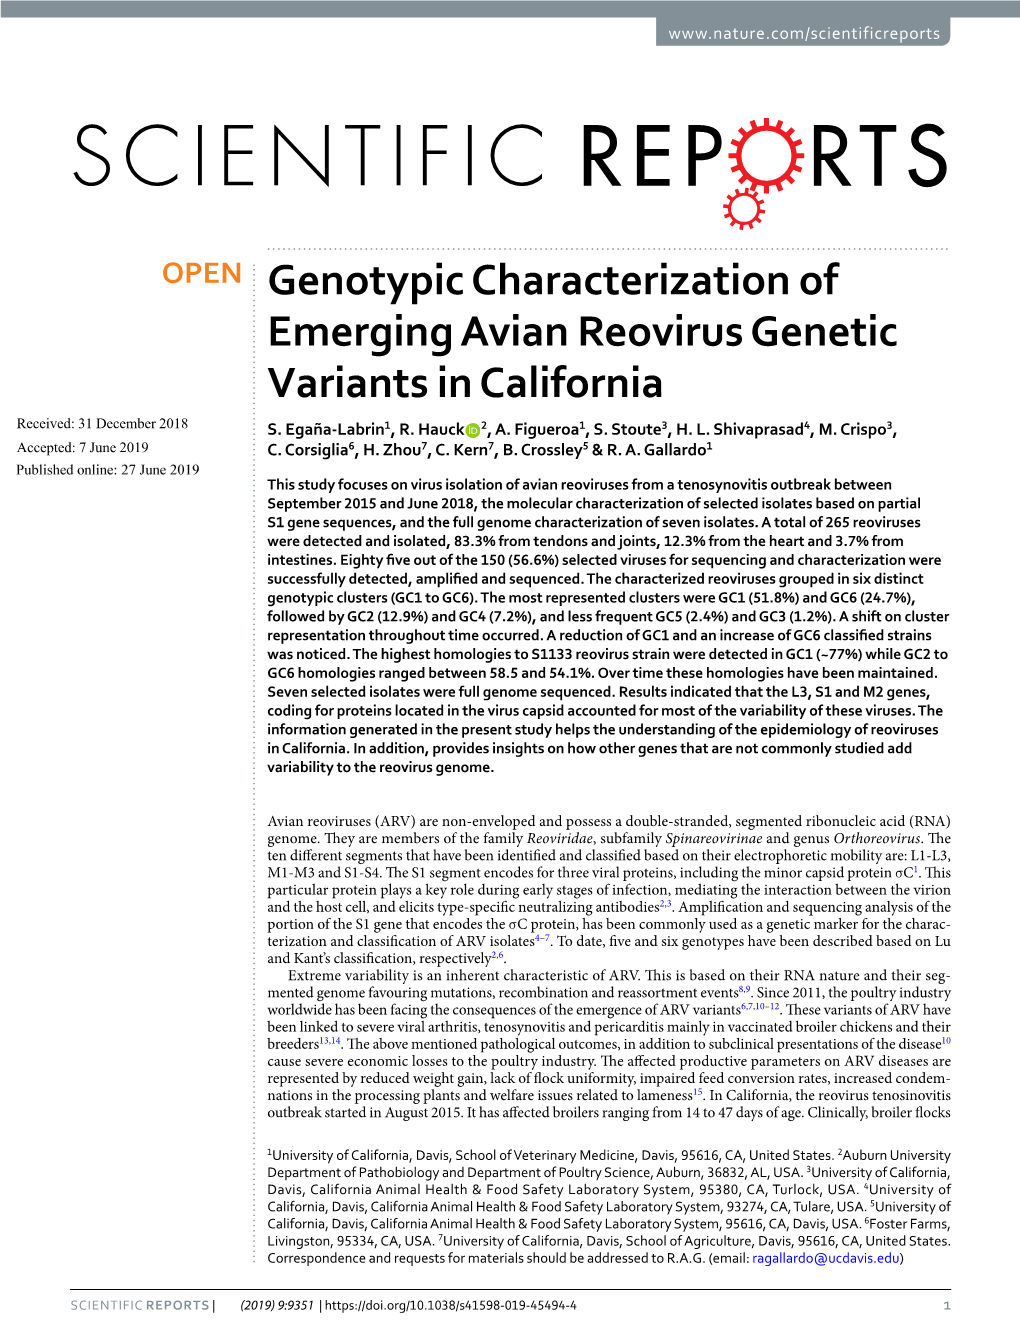 Genotypic Characterization of Emerging Avian Reovirus Genetic Variants in California Received: 31 December 2018 S